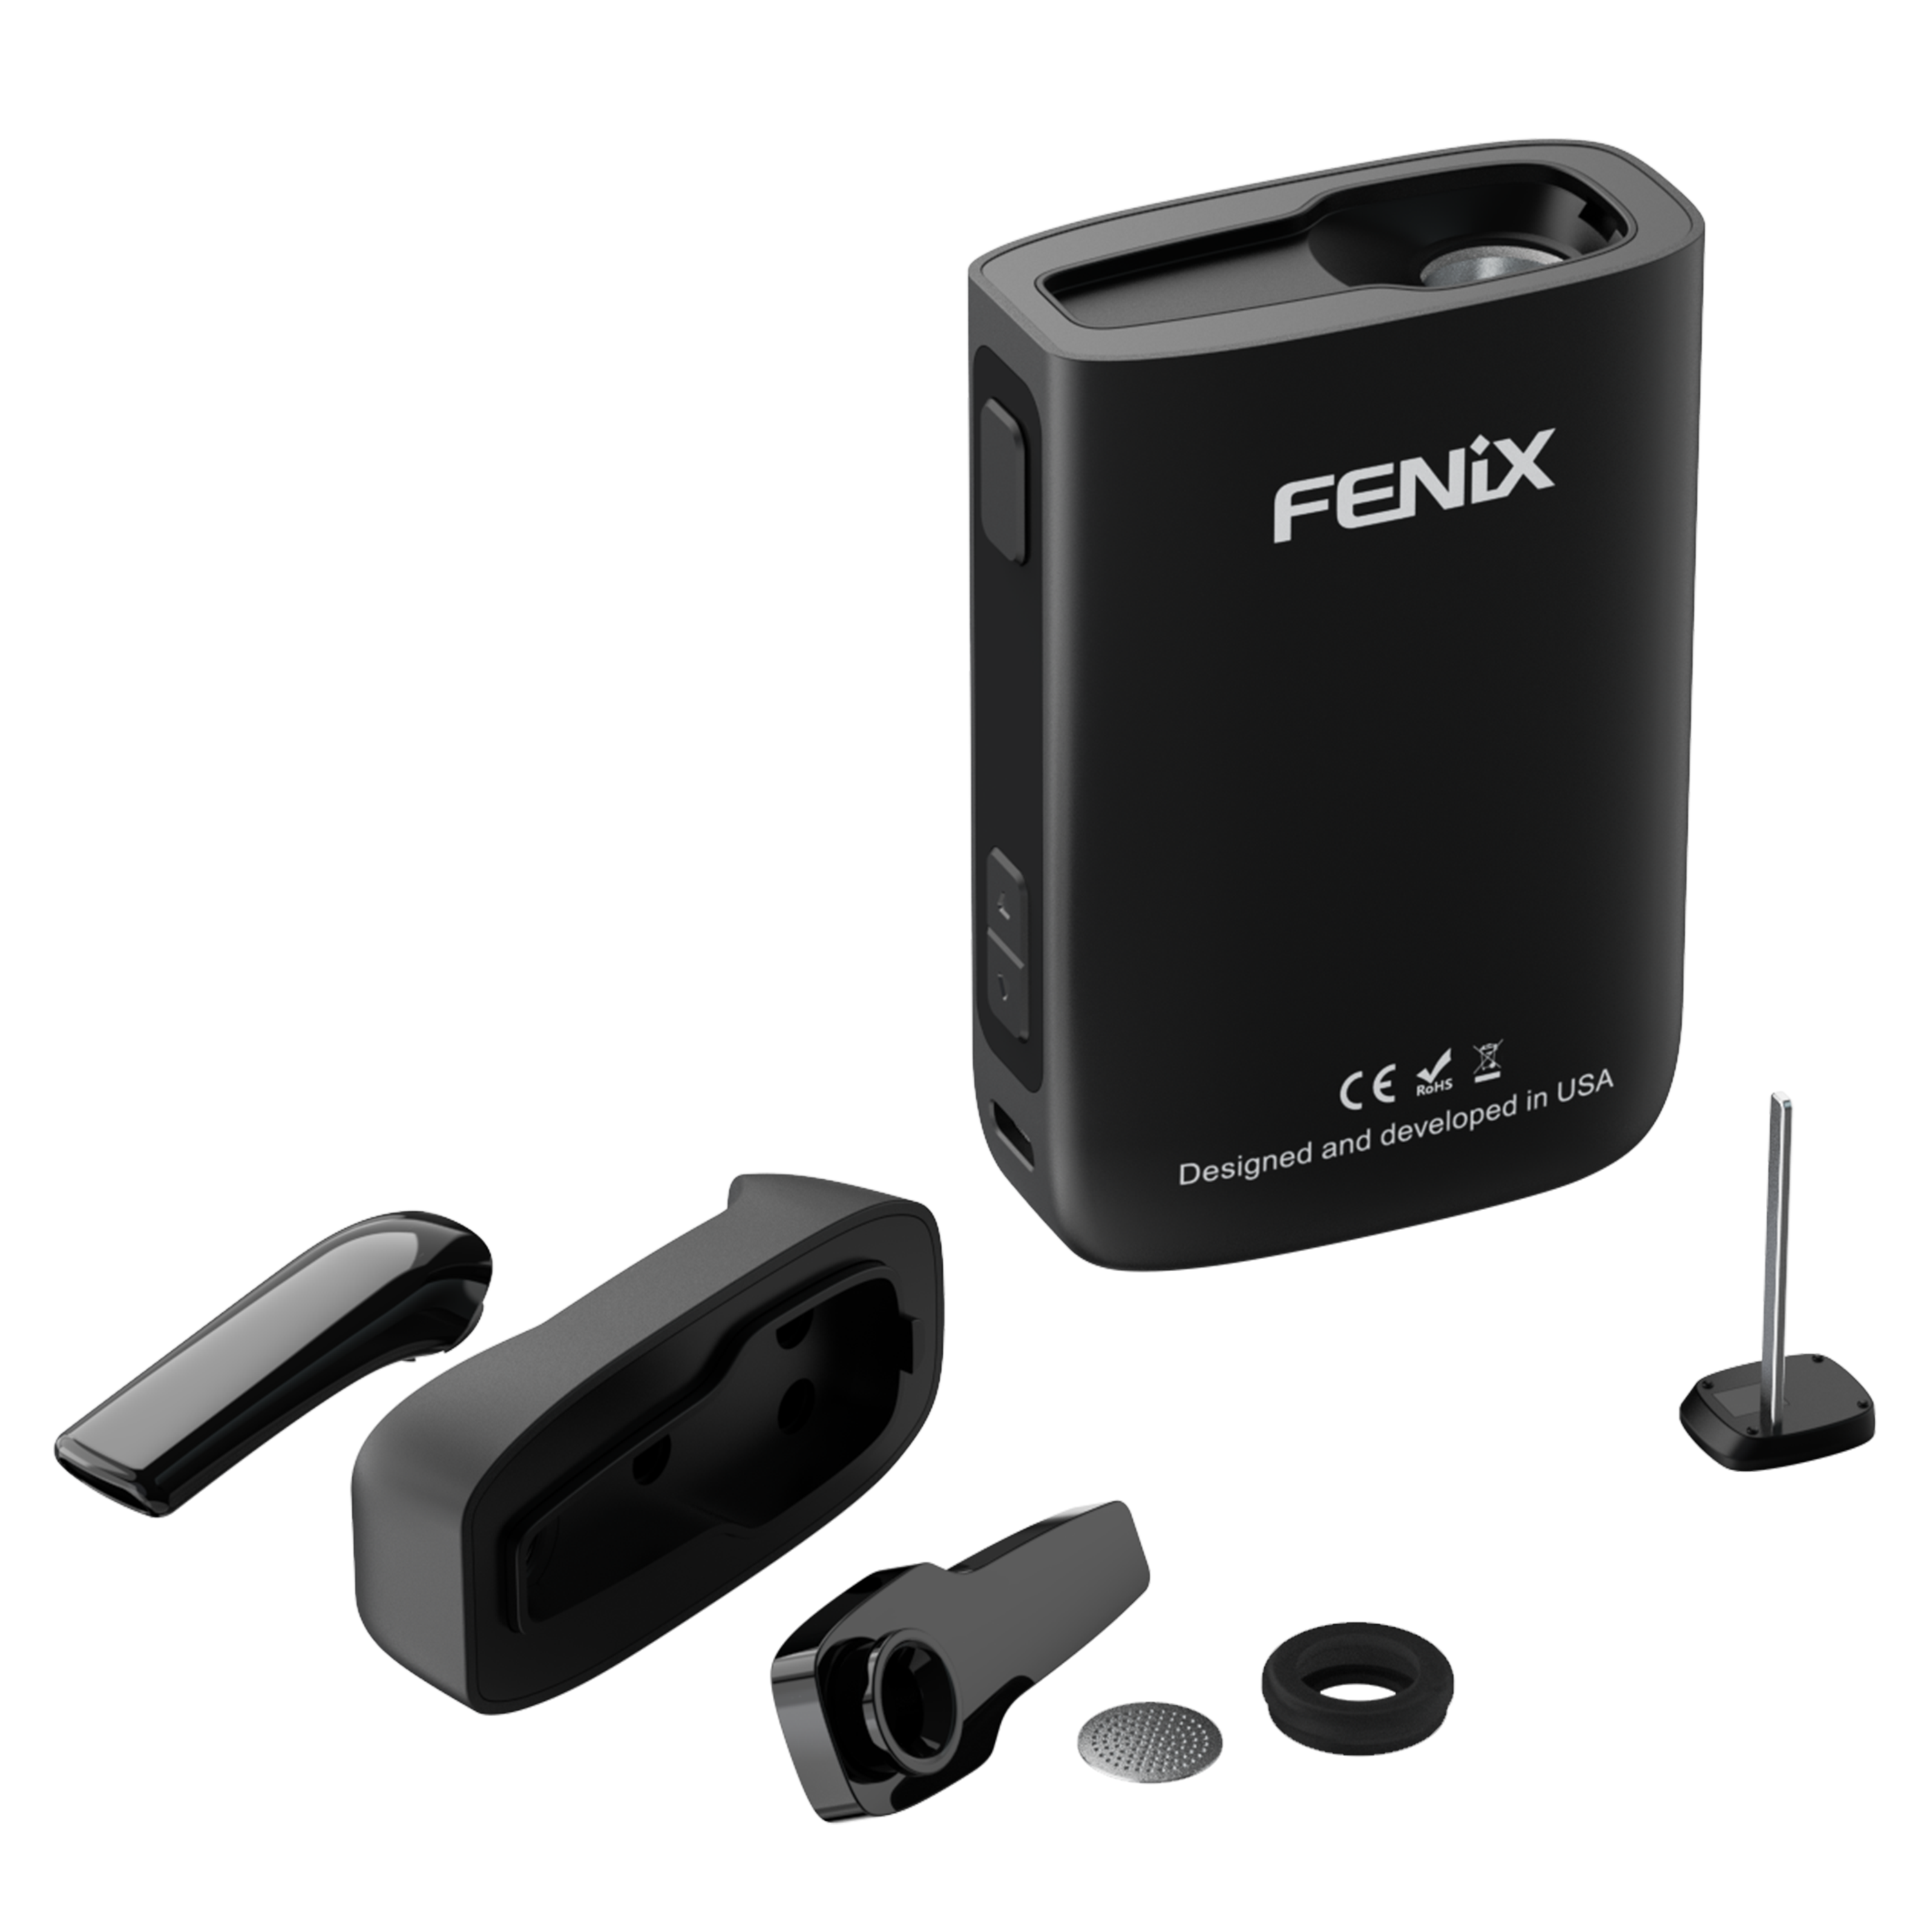 Fenix Neo Portable Vaporizer